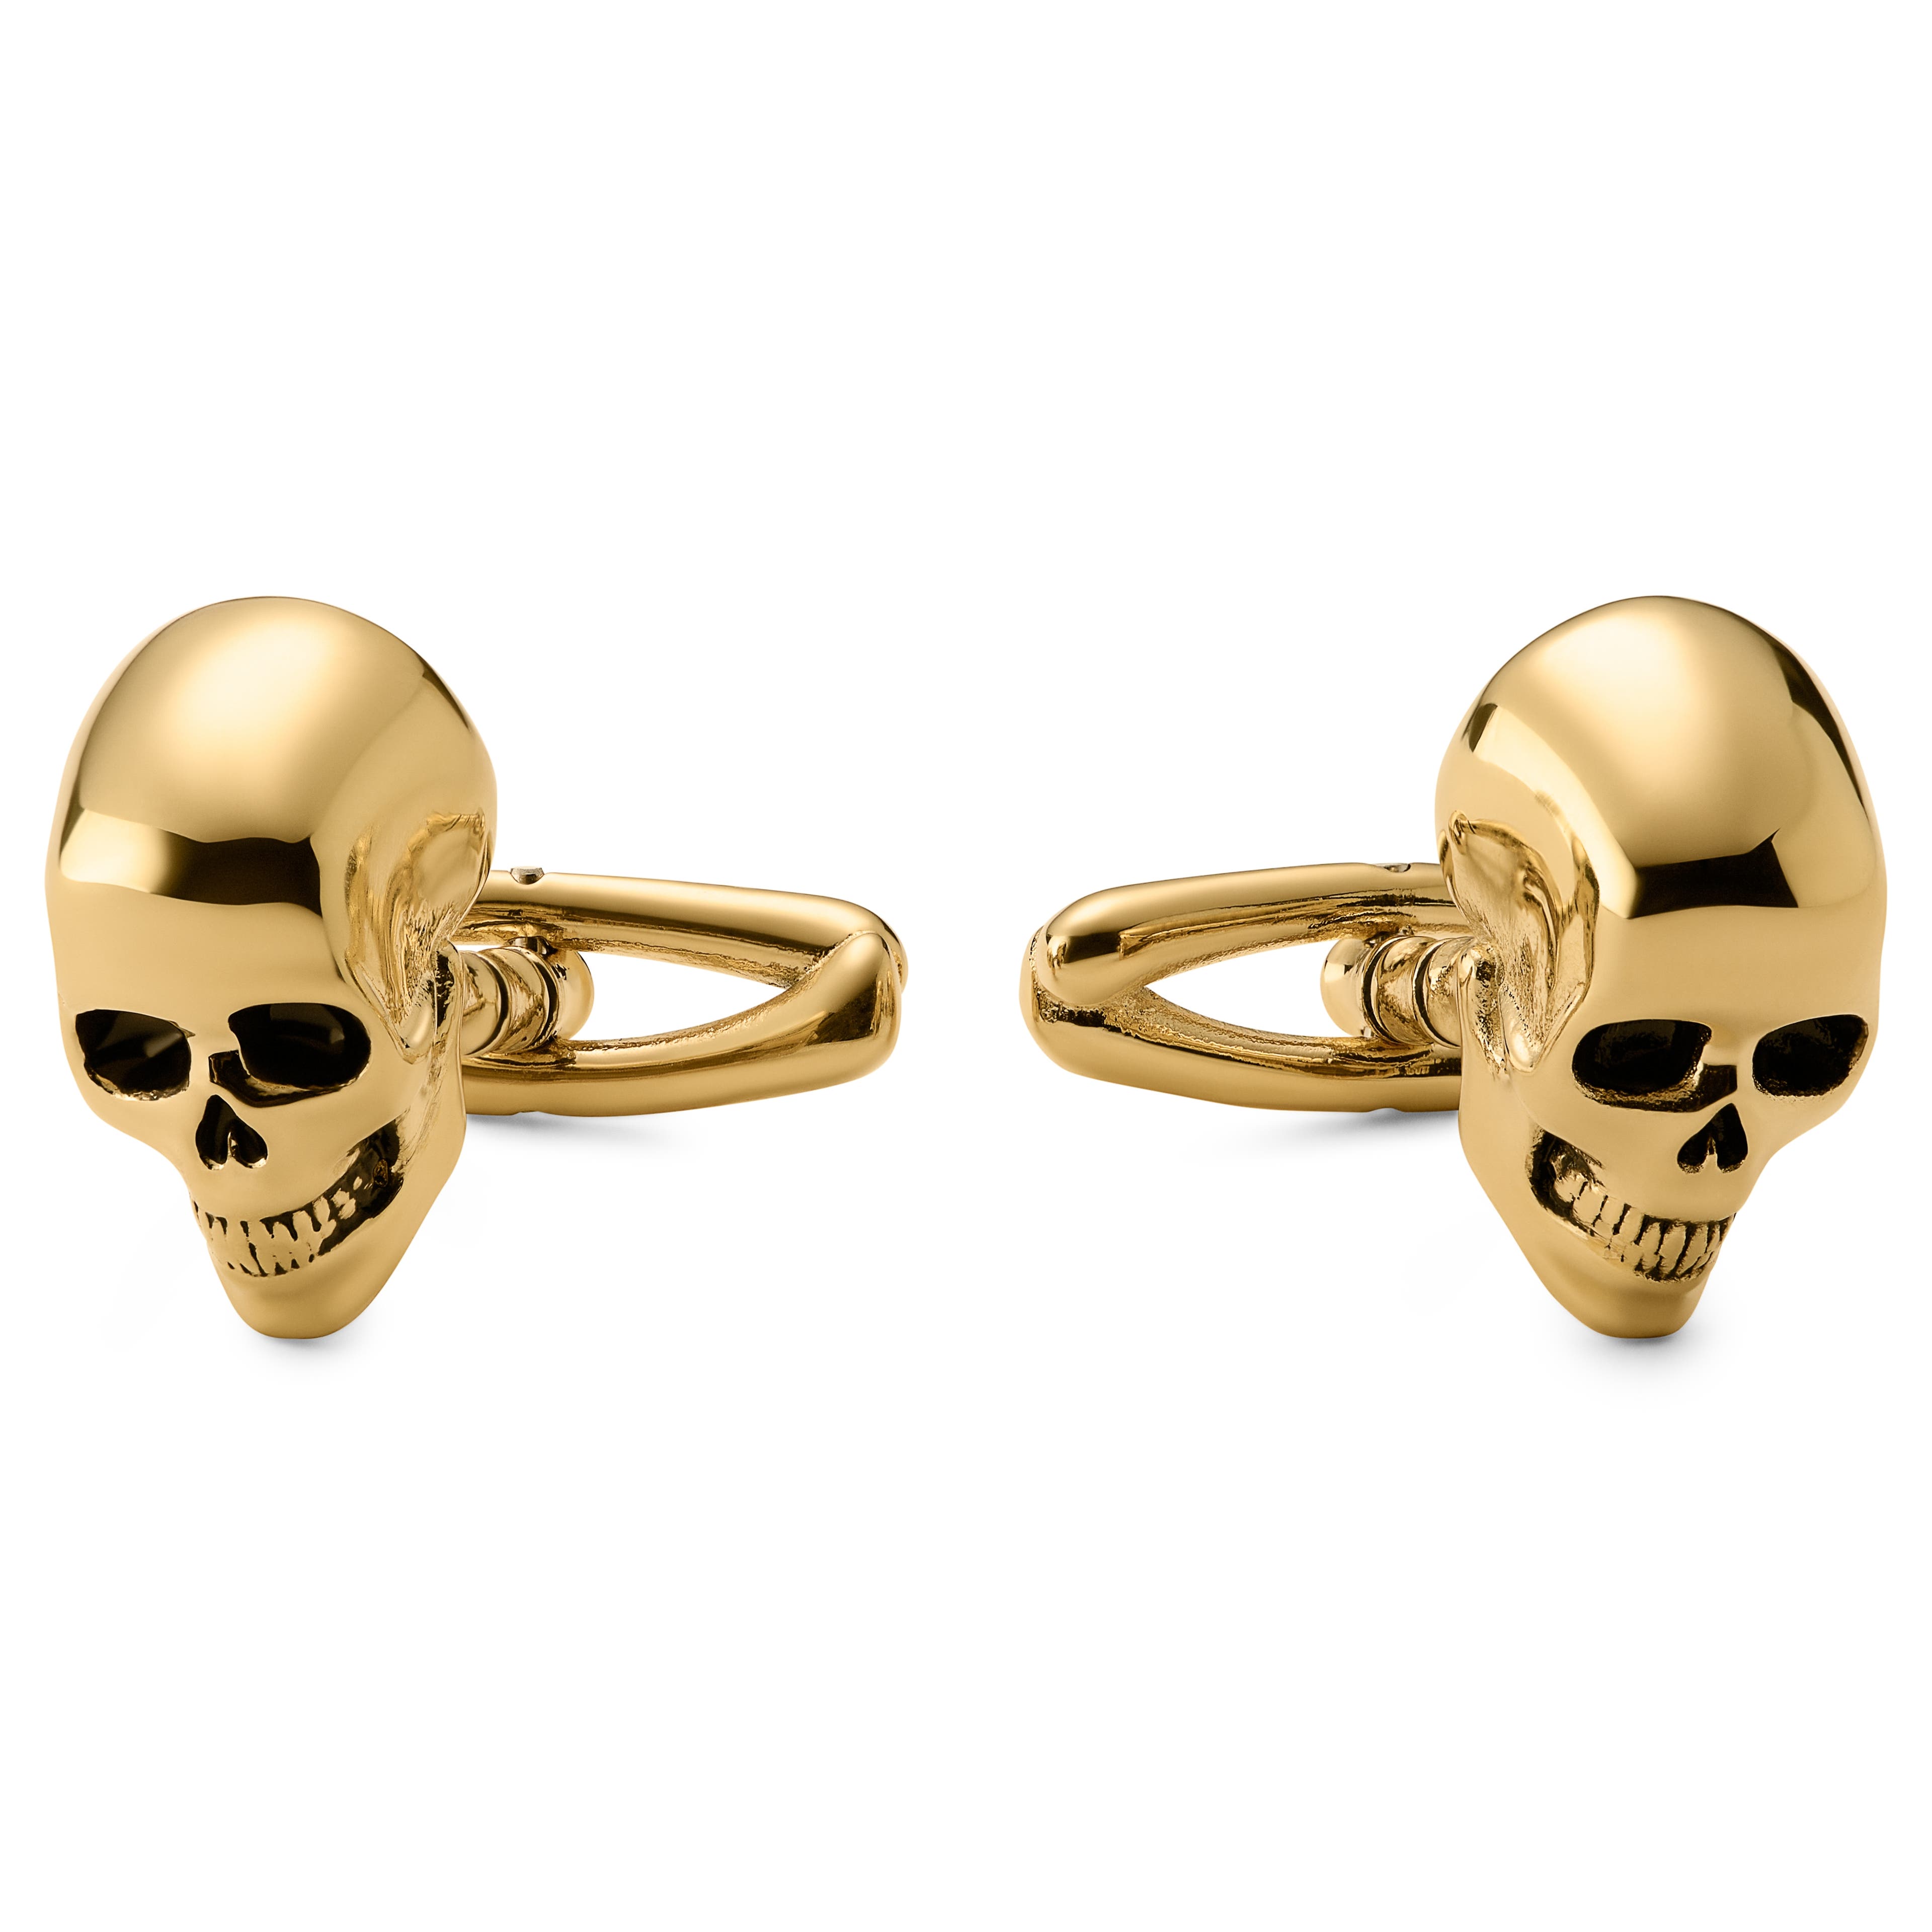 Aspero | Χρυσαφί Ατσάλινα Μανικετόκουμπα Skull